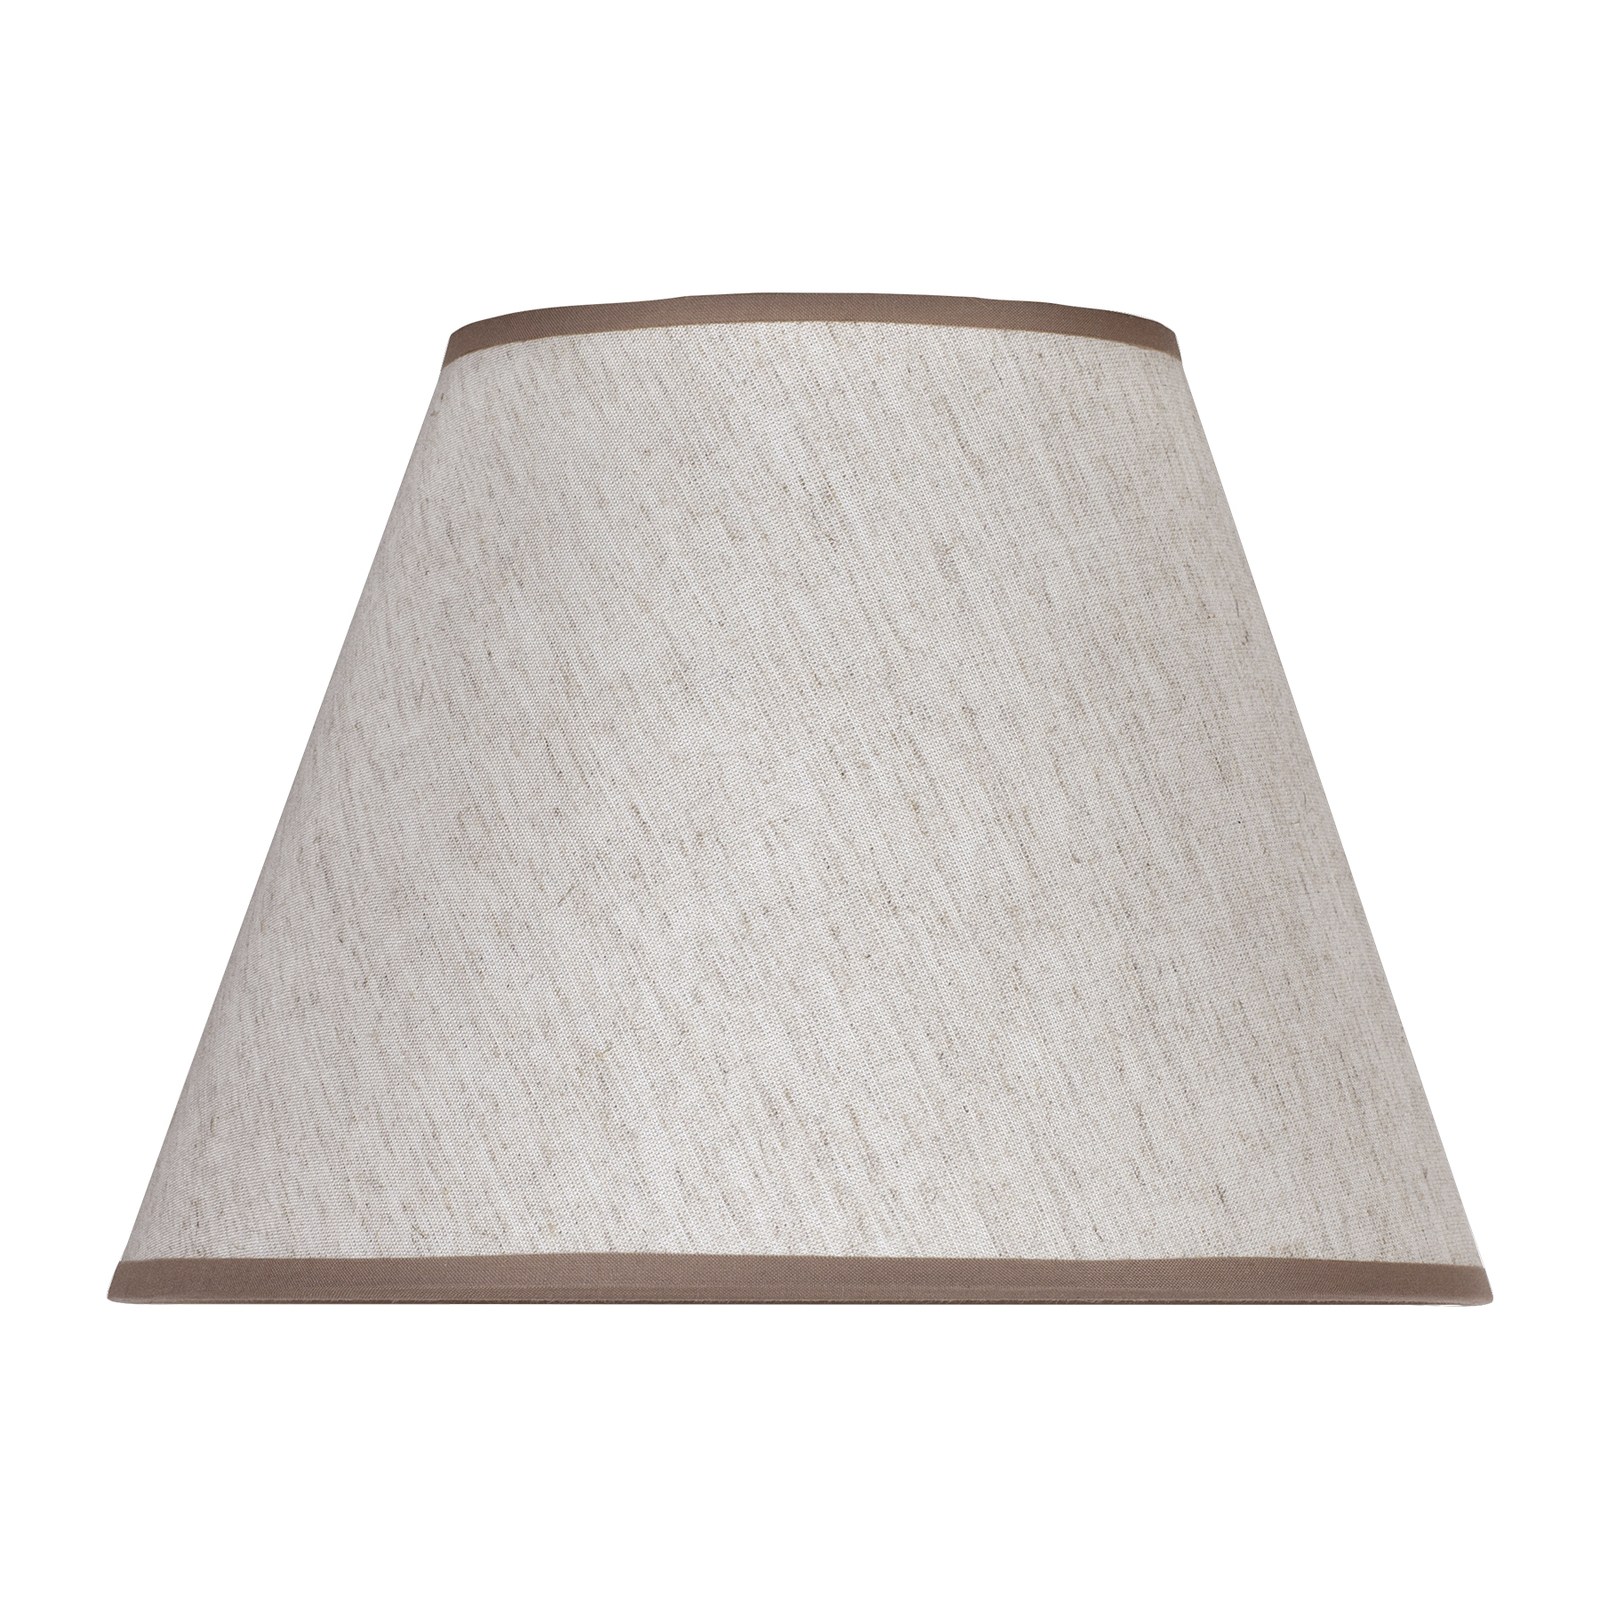 Mini Romance lampshade for floor lamp ecru/beige